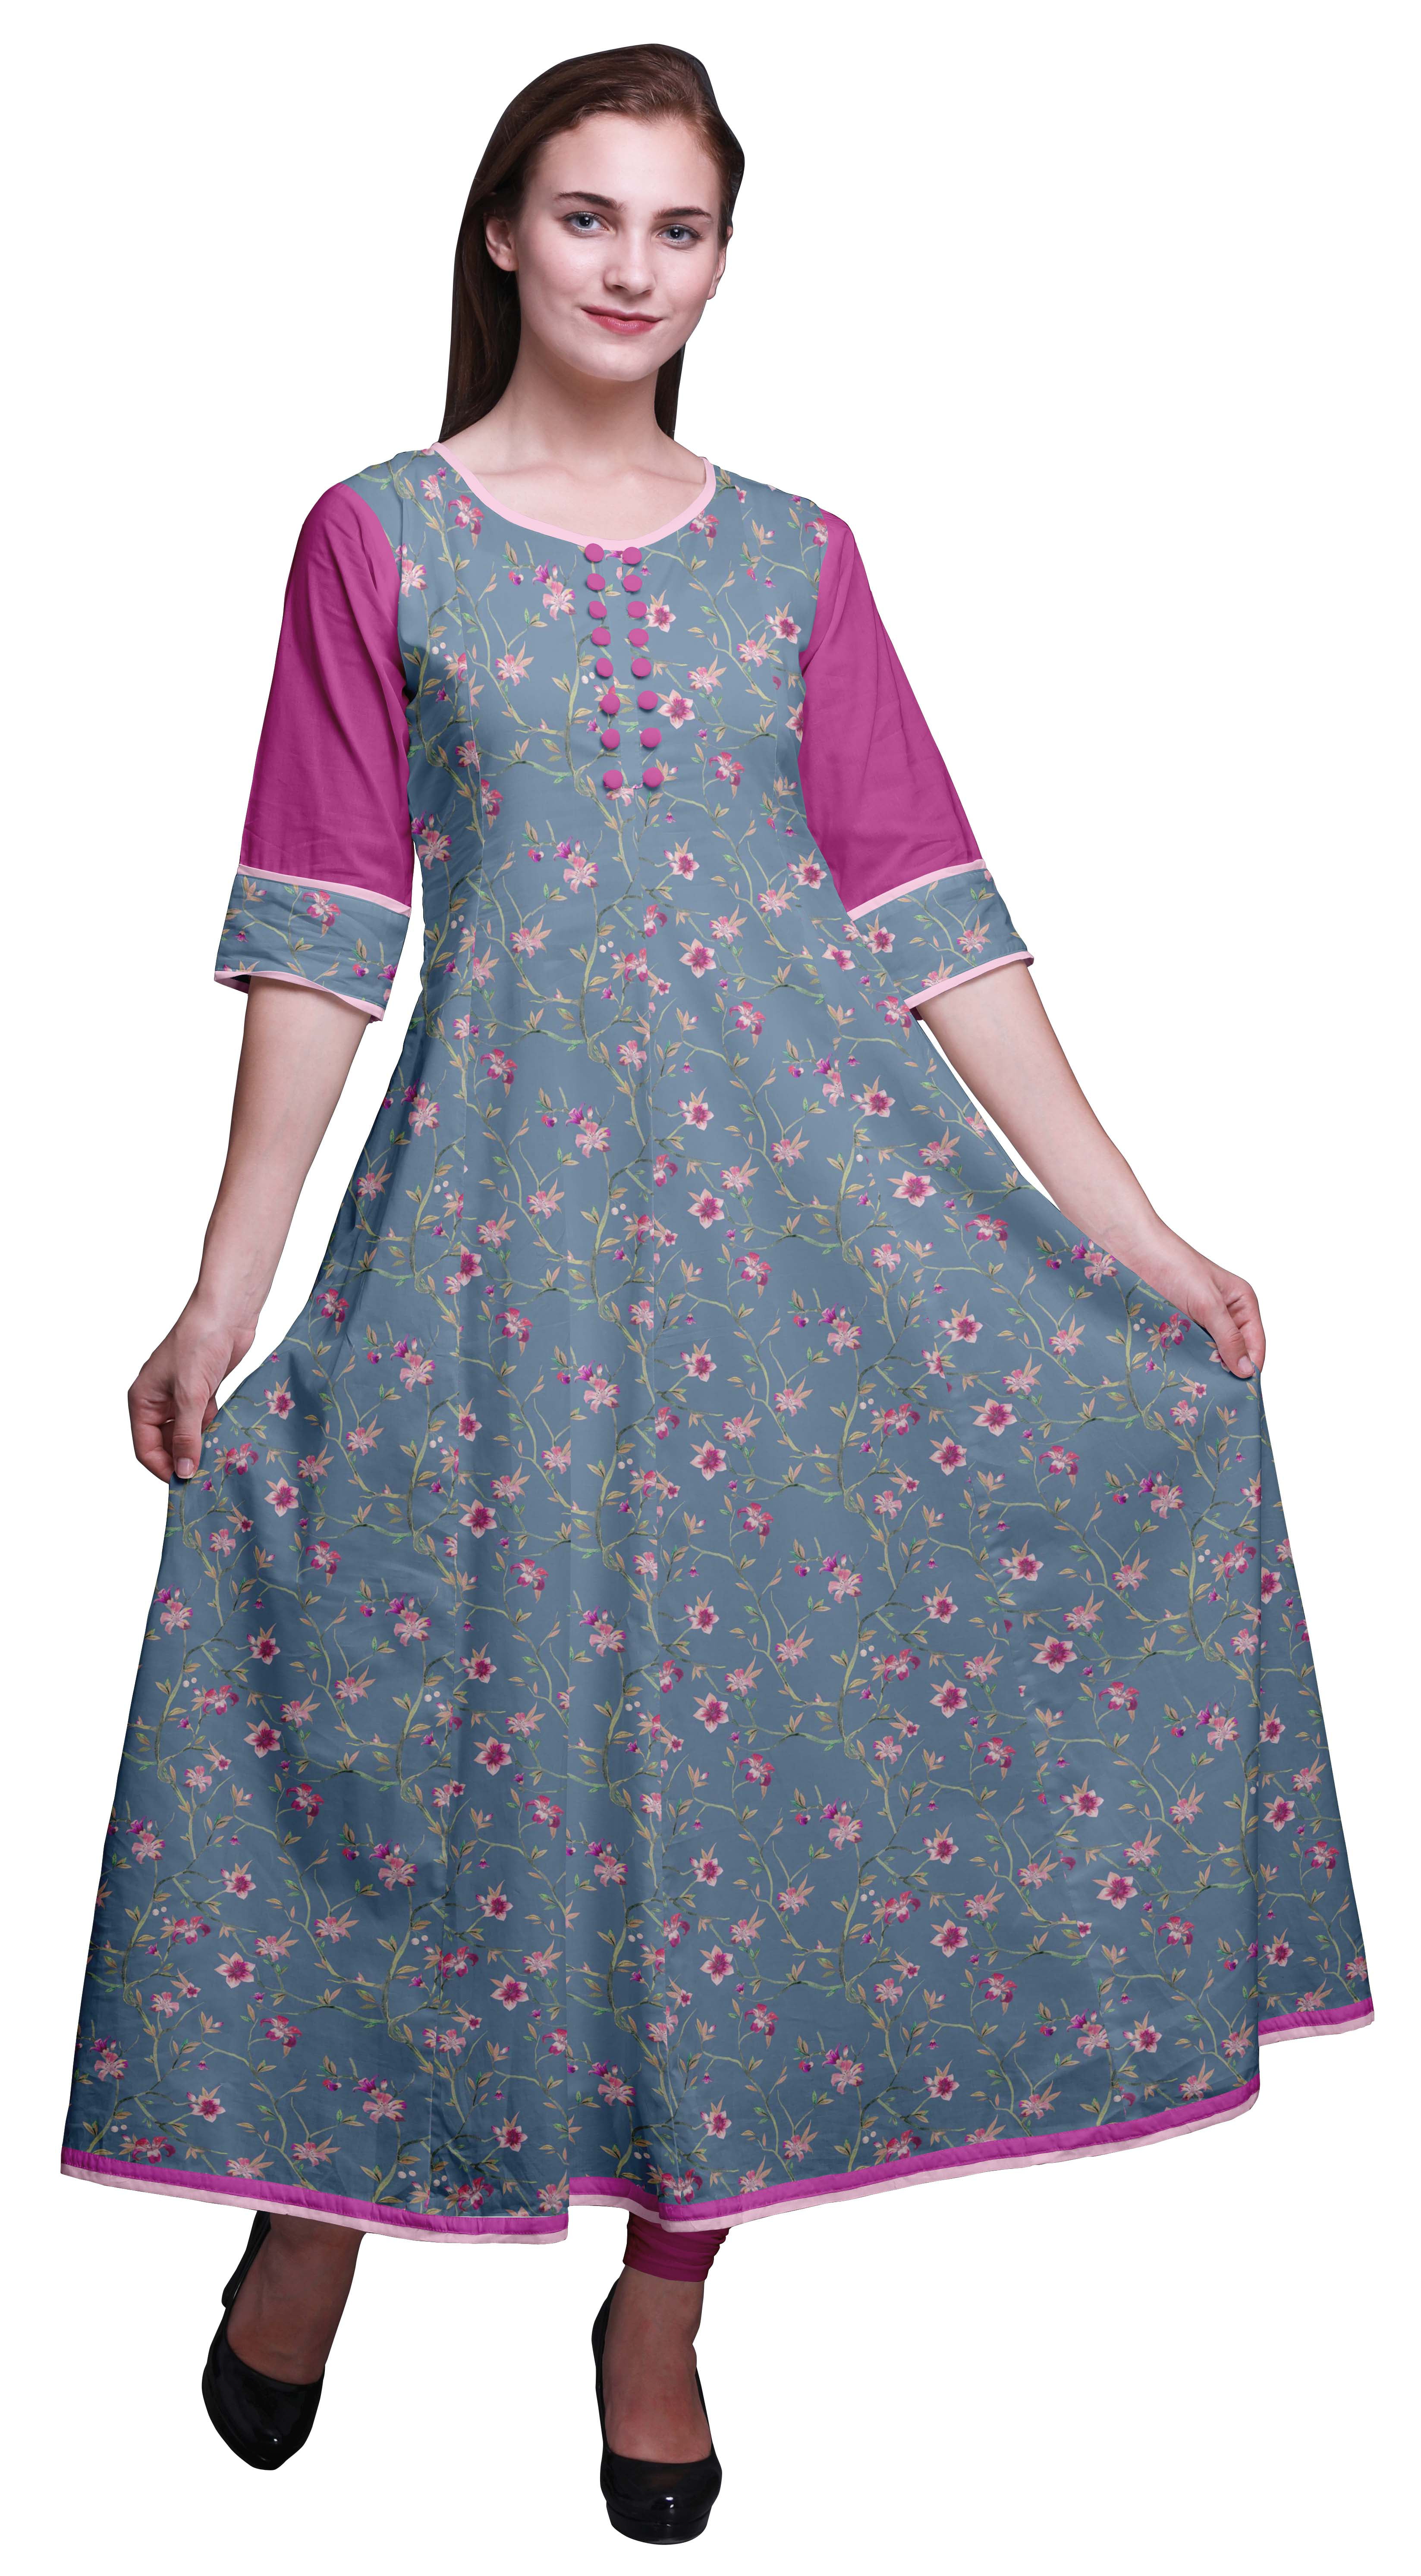 Details about   Pakistani Casual Wear Women's Cotton A-Line Kurta Solid 3/4 Sleeves Dress 